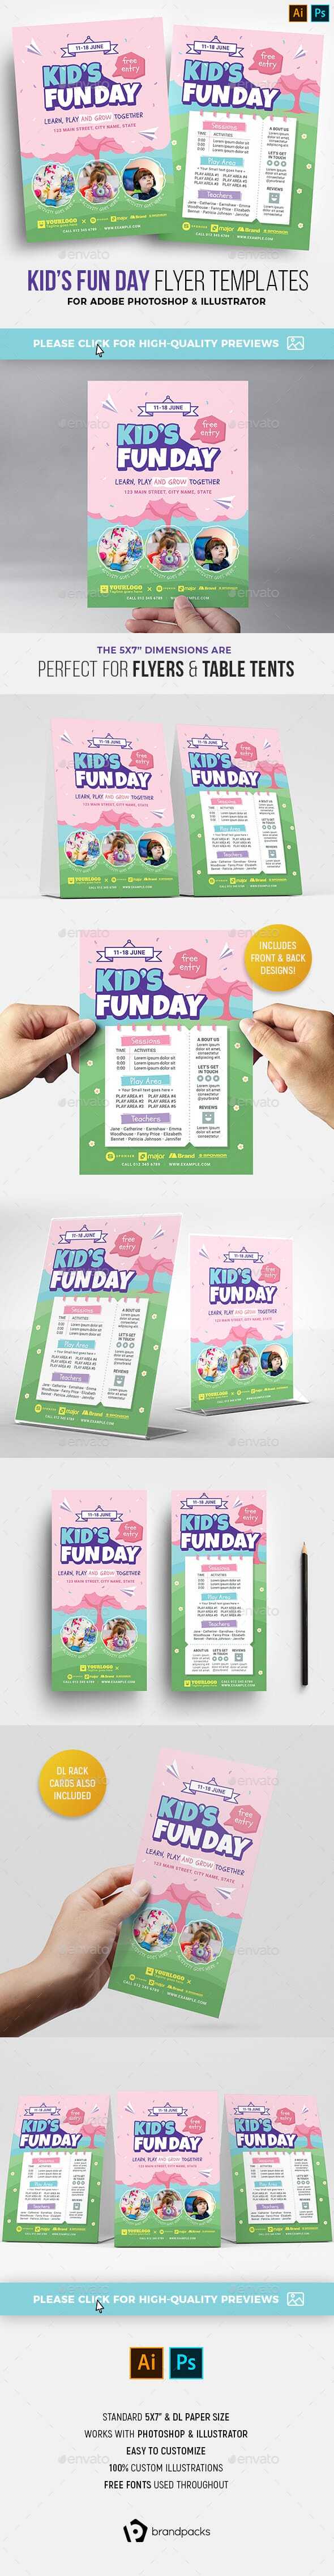 Kid's Fun Day Flyer Template